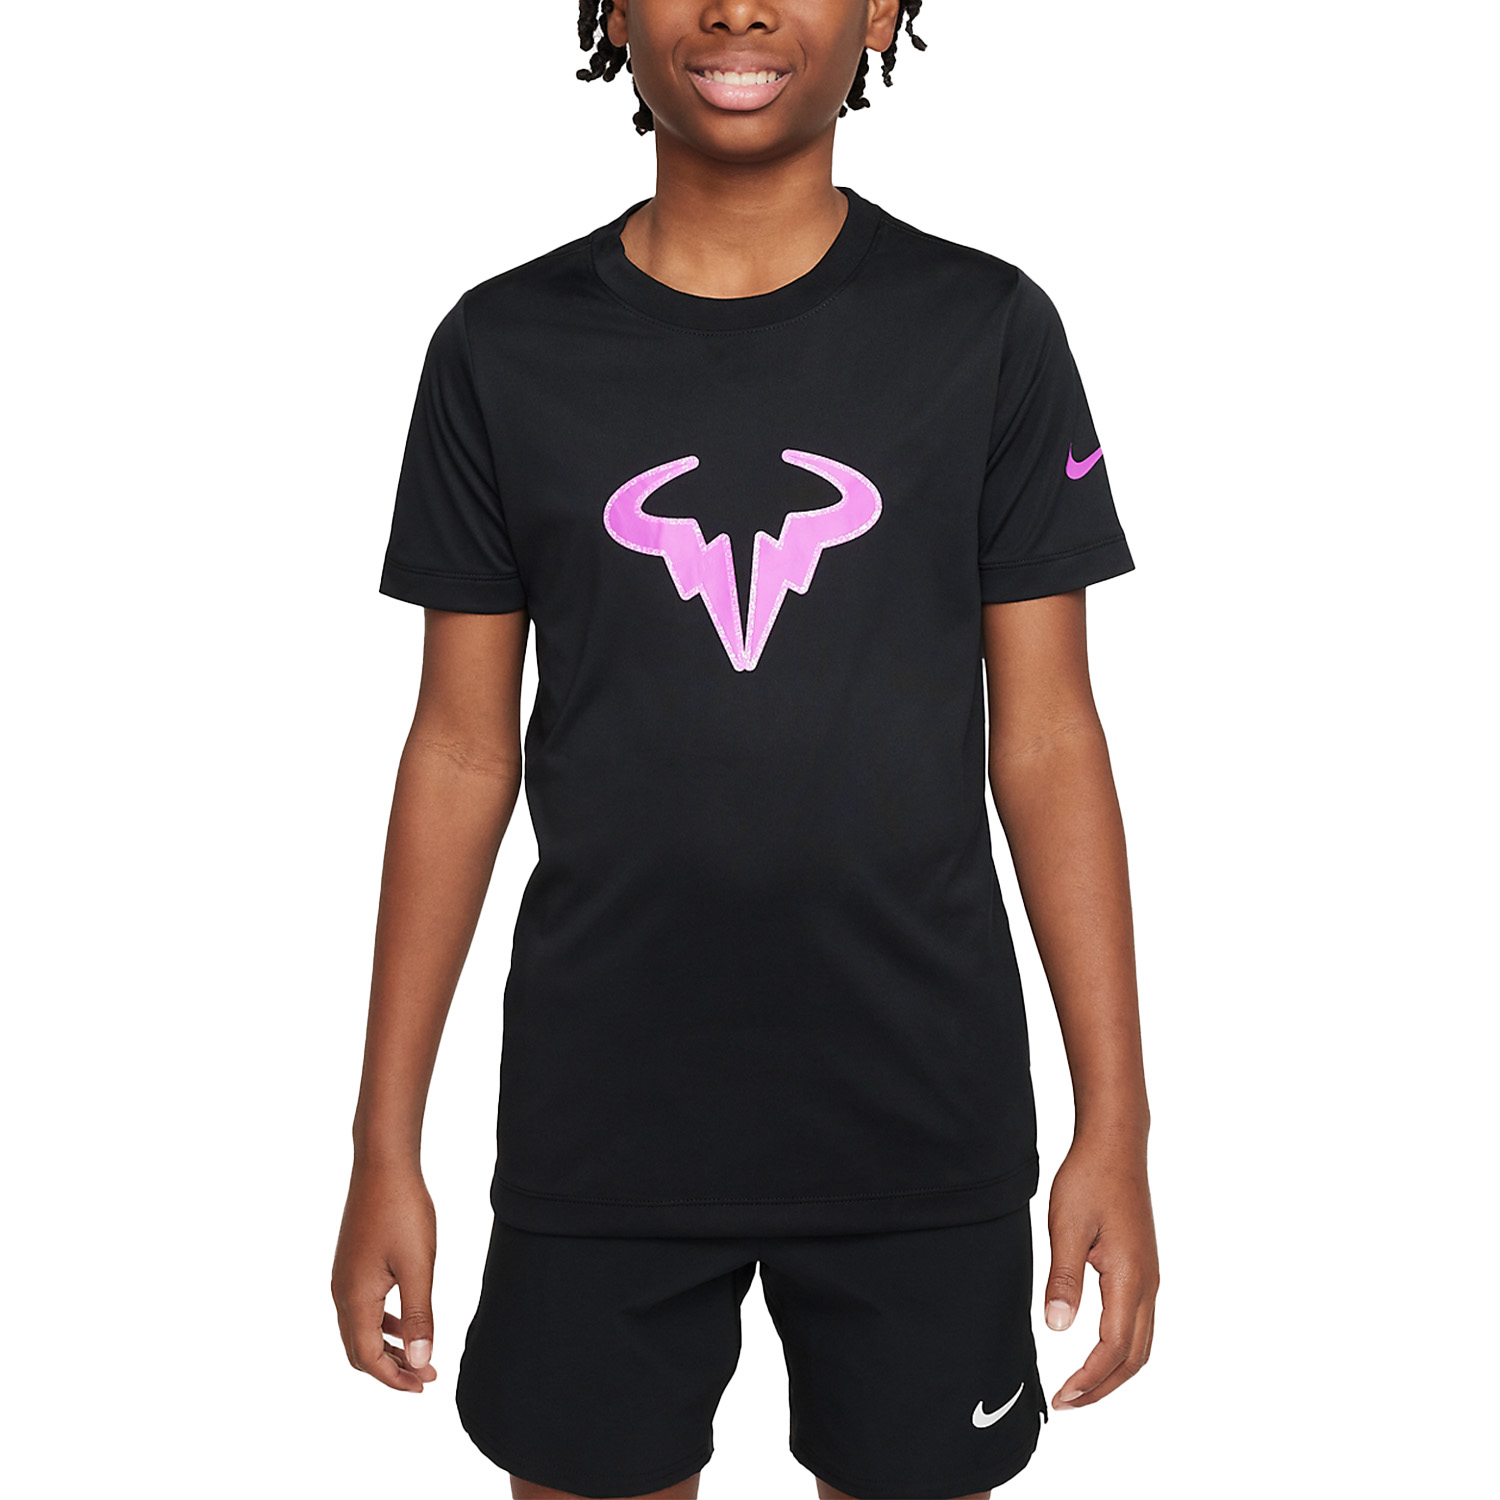 Nike Dri-FIT Rafa T-Shirt Boy - Black